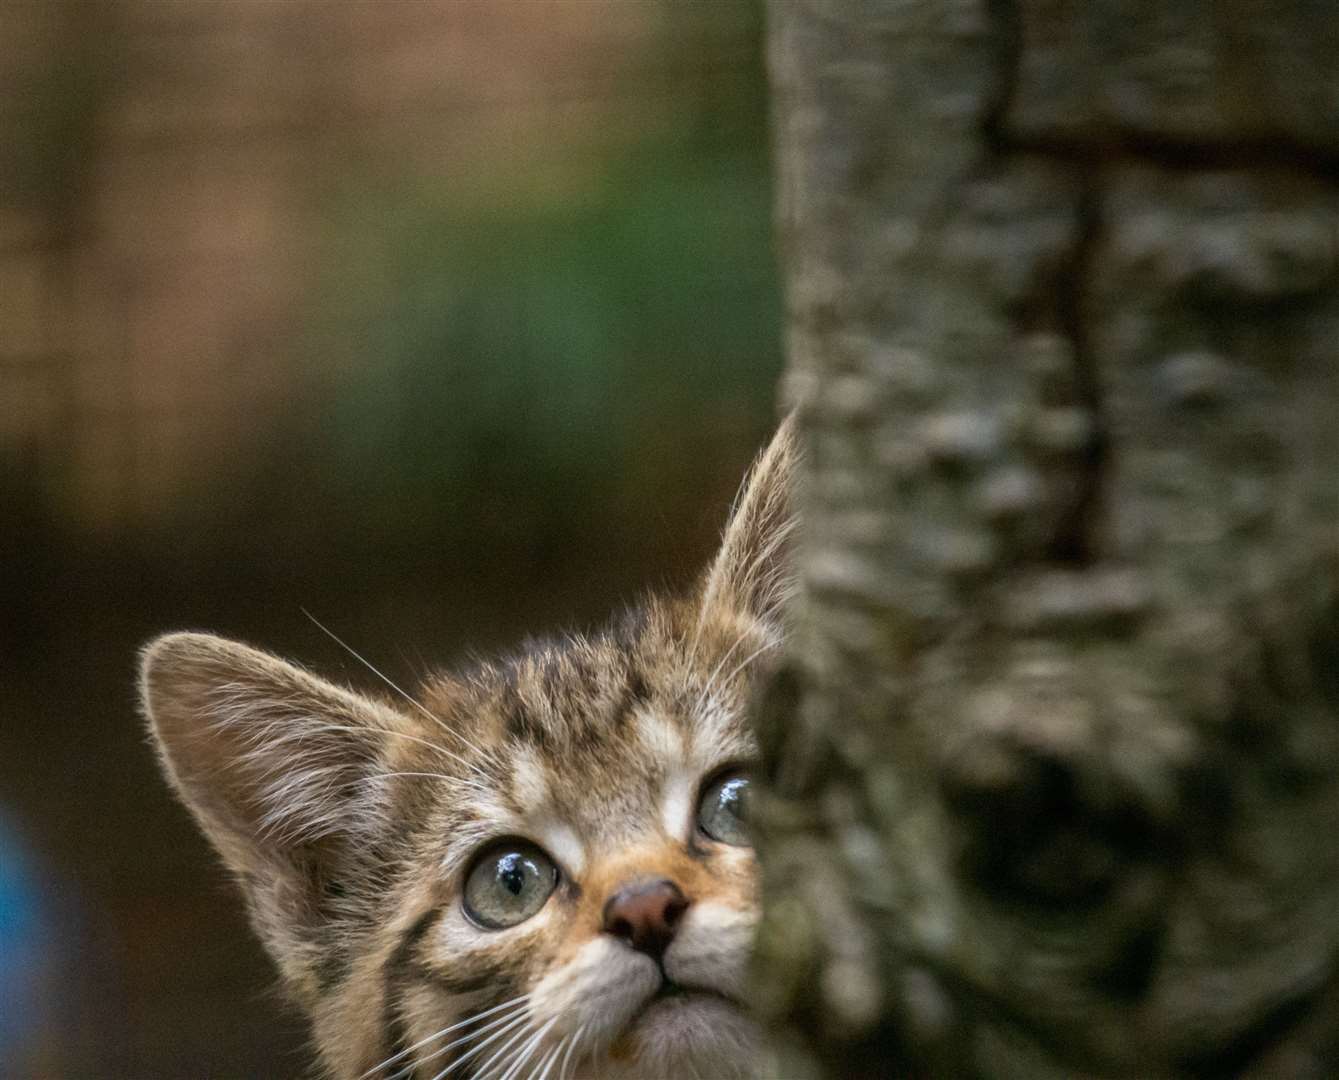 Wildcat kitten at the Highland Wildlife Park.